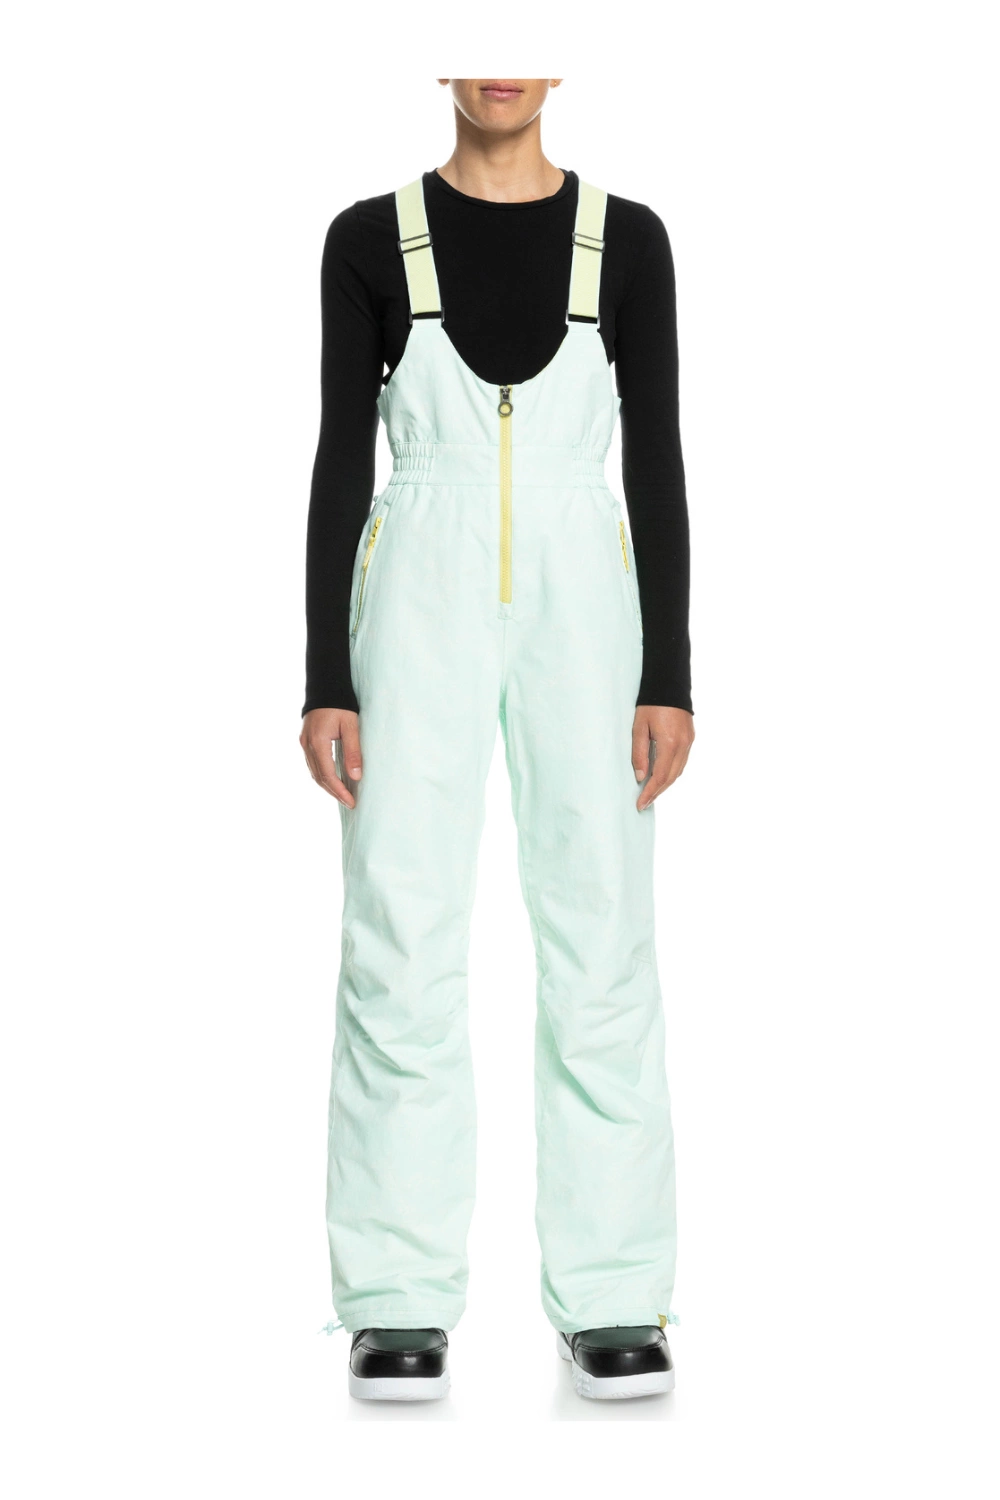 Spodnie ROXY Diversion narciarskie damskie śnieżne z membraną 10K r. M -  ERJTP03185 RQN0 - 14639883017 